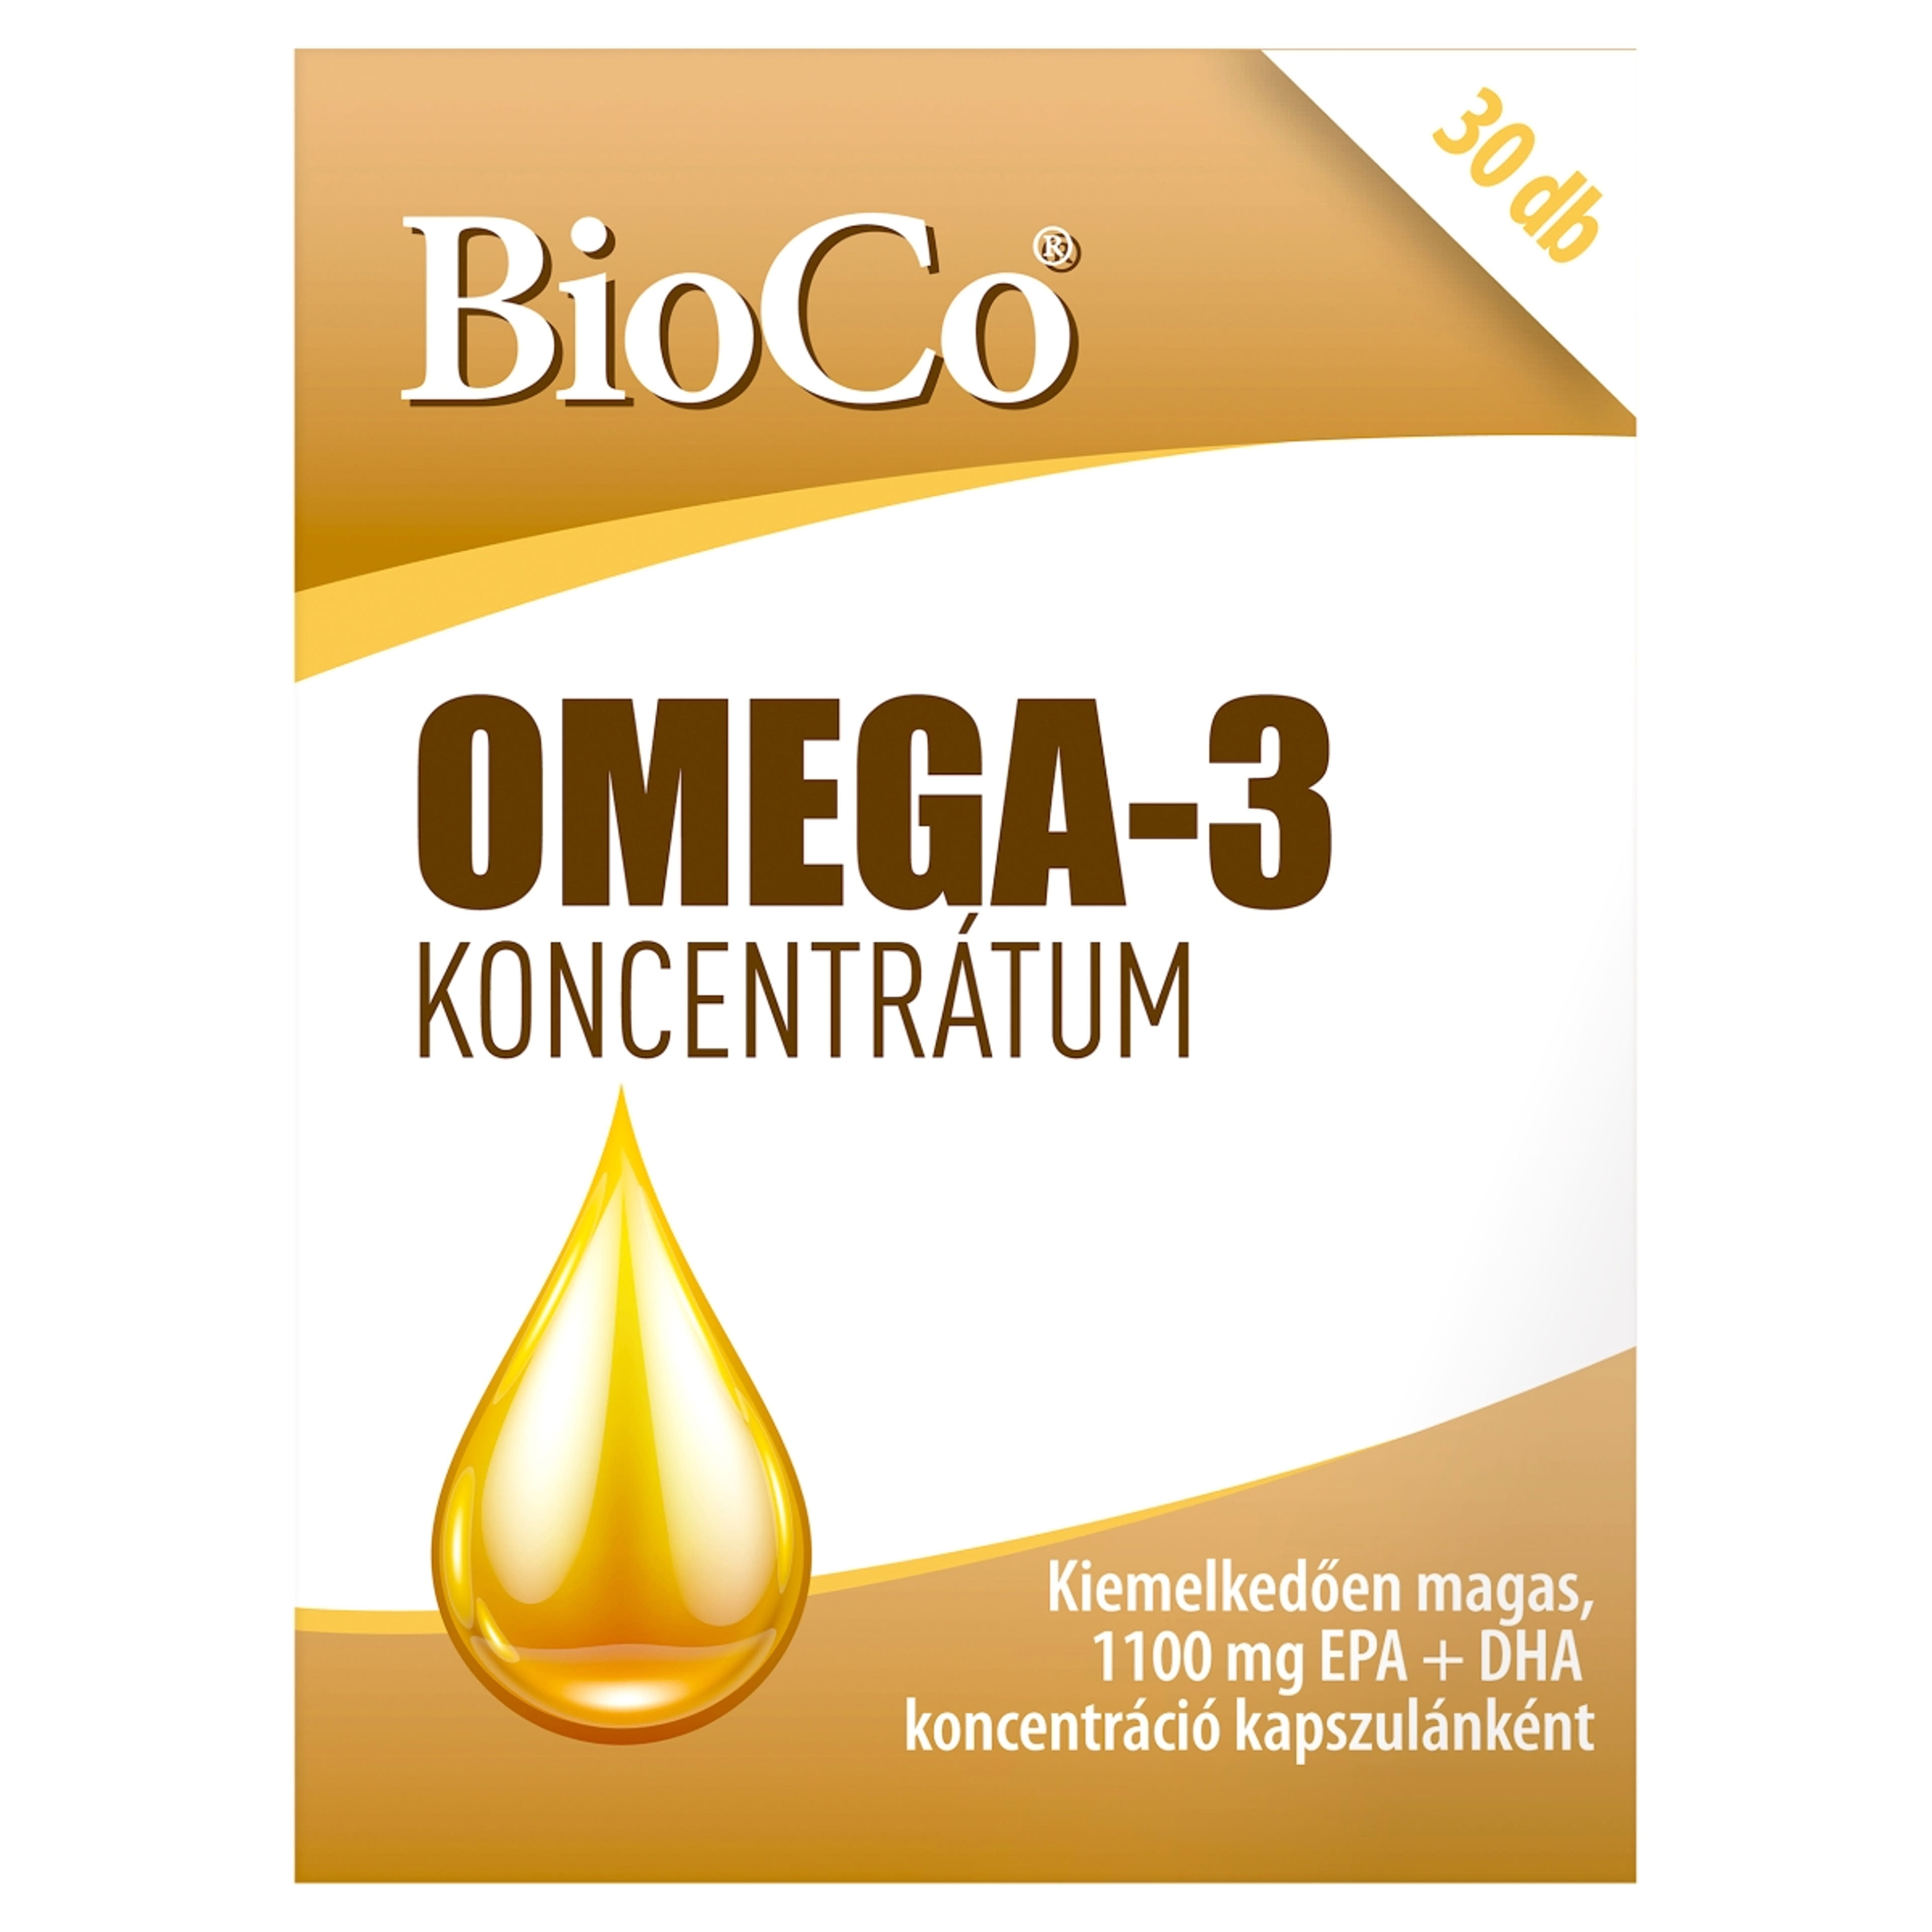 Bioco Omega-3 koncentrátum - 30 db-1